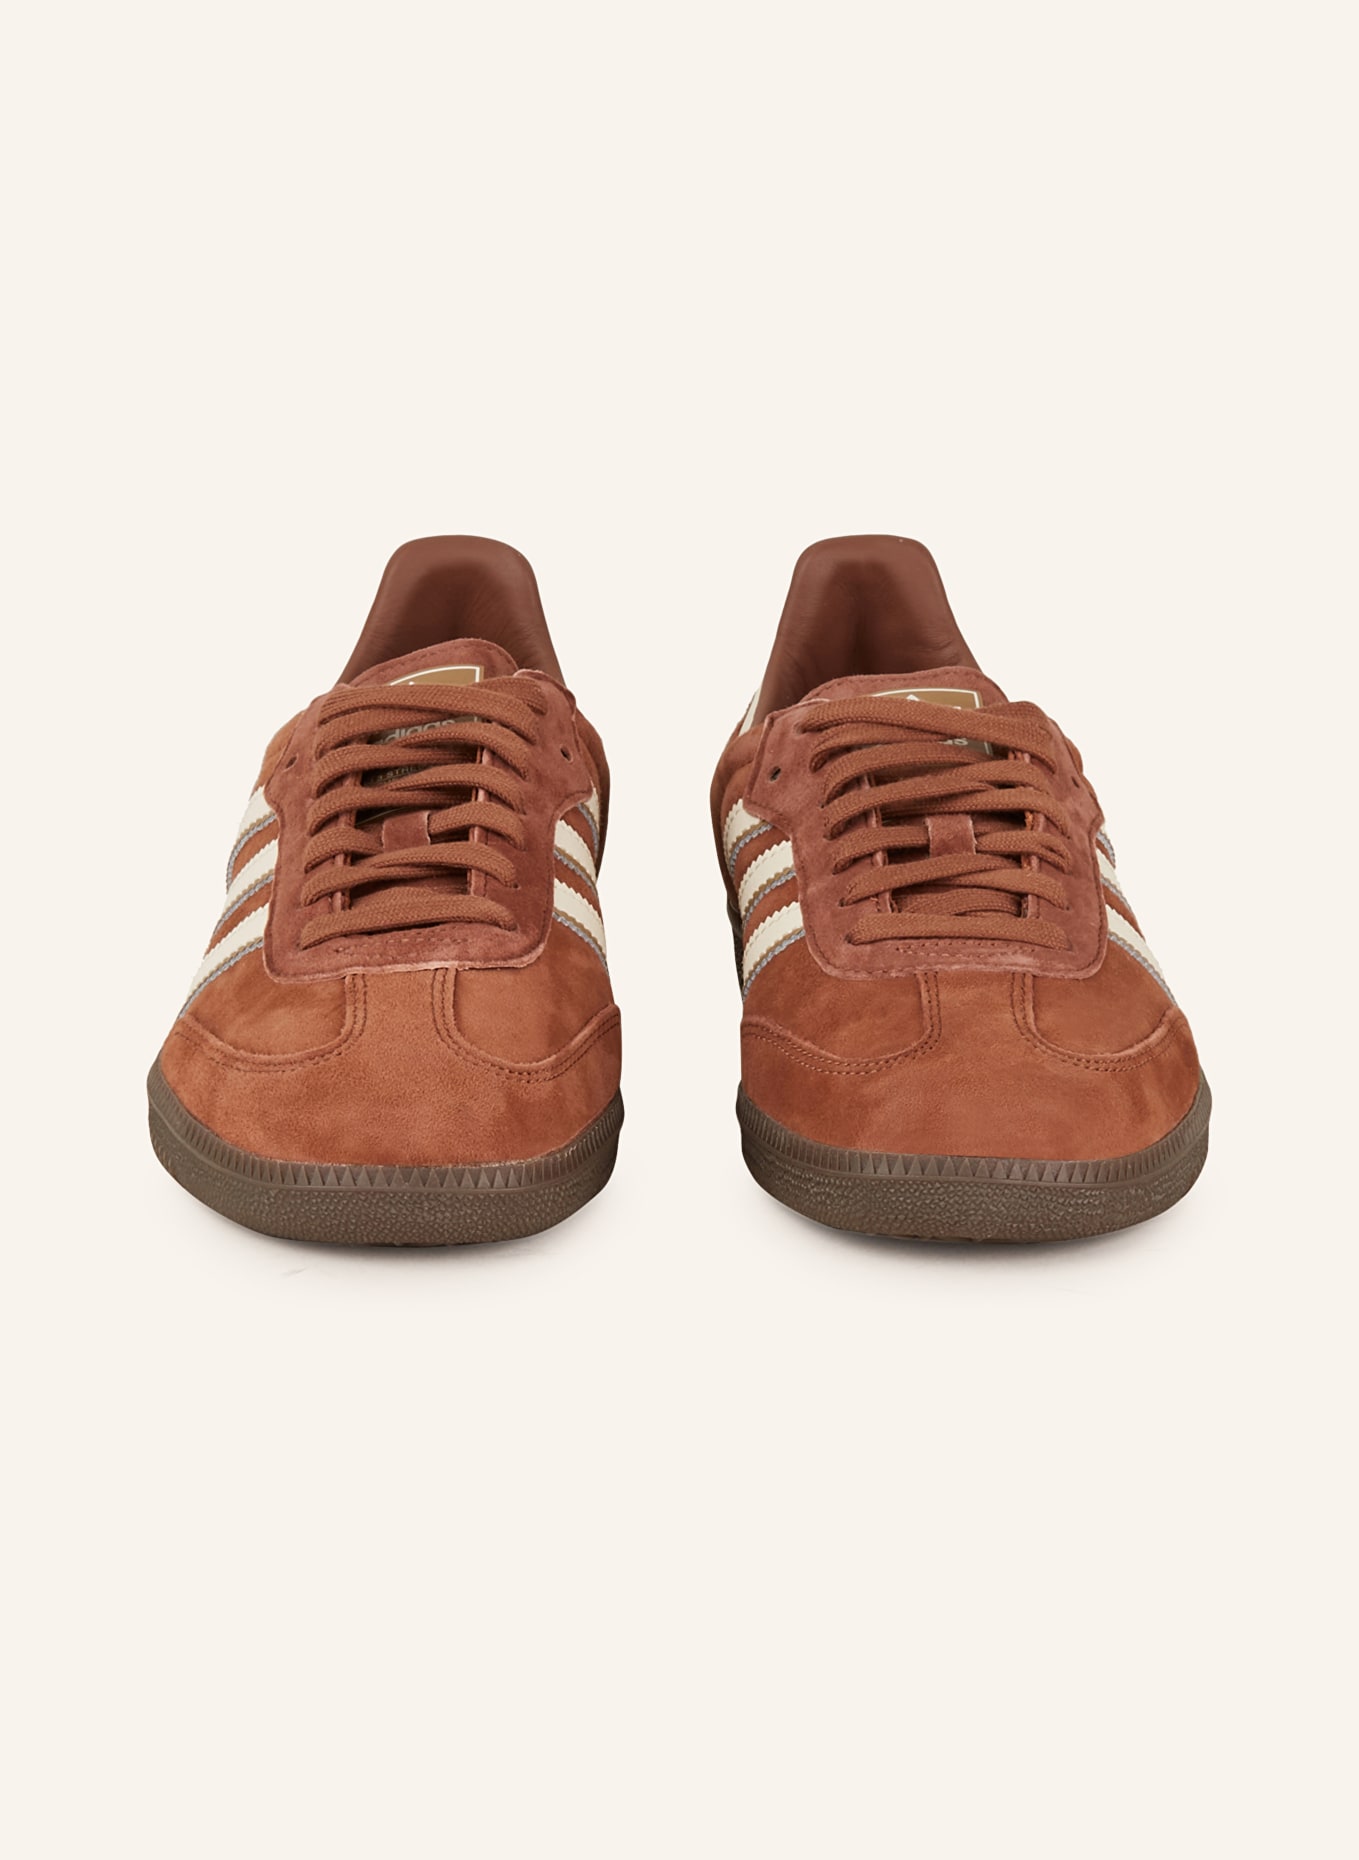 adidas Originals Gazelle sneakers in brown and black | ASOS